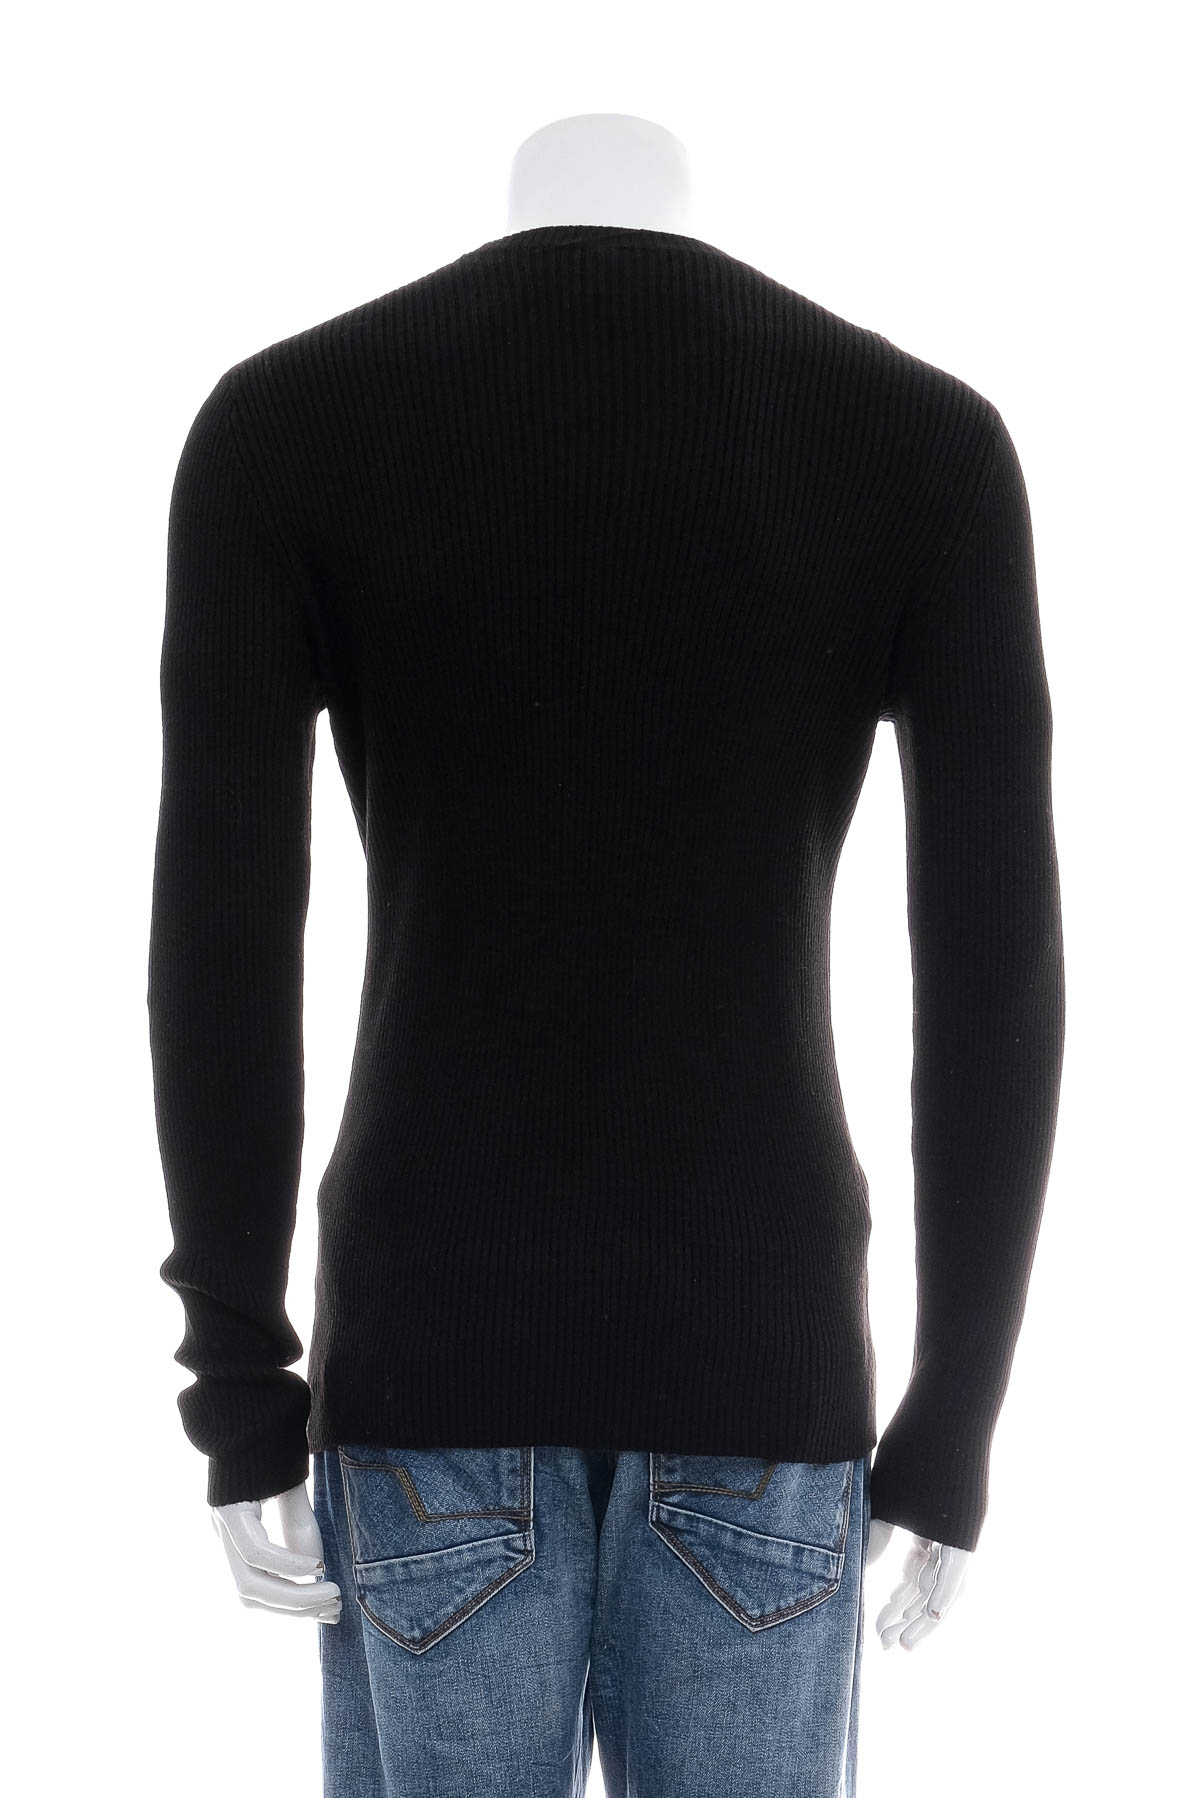 Men's sweater - Asos - 1